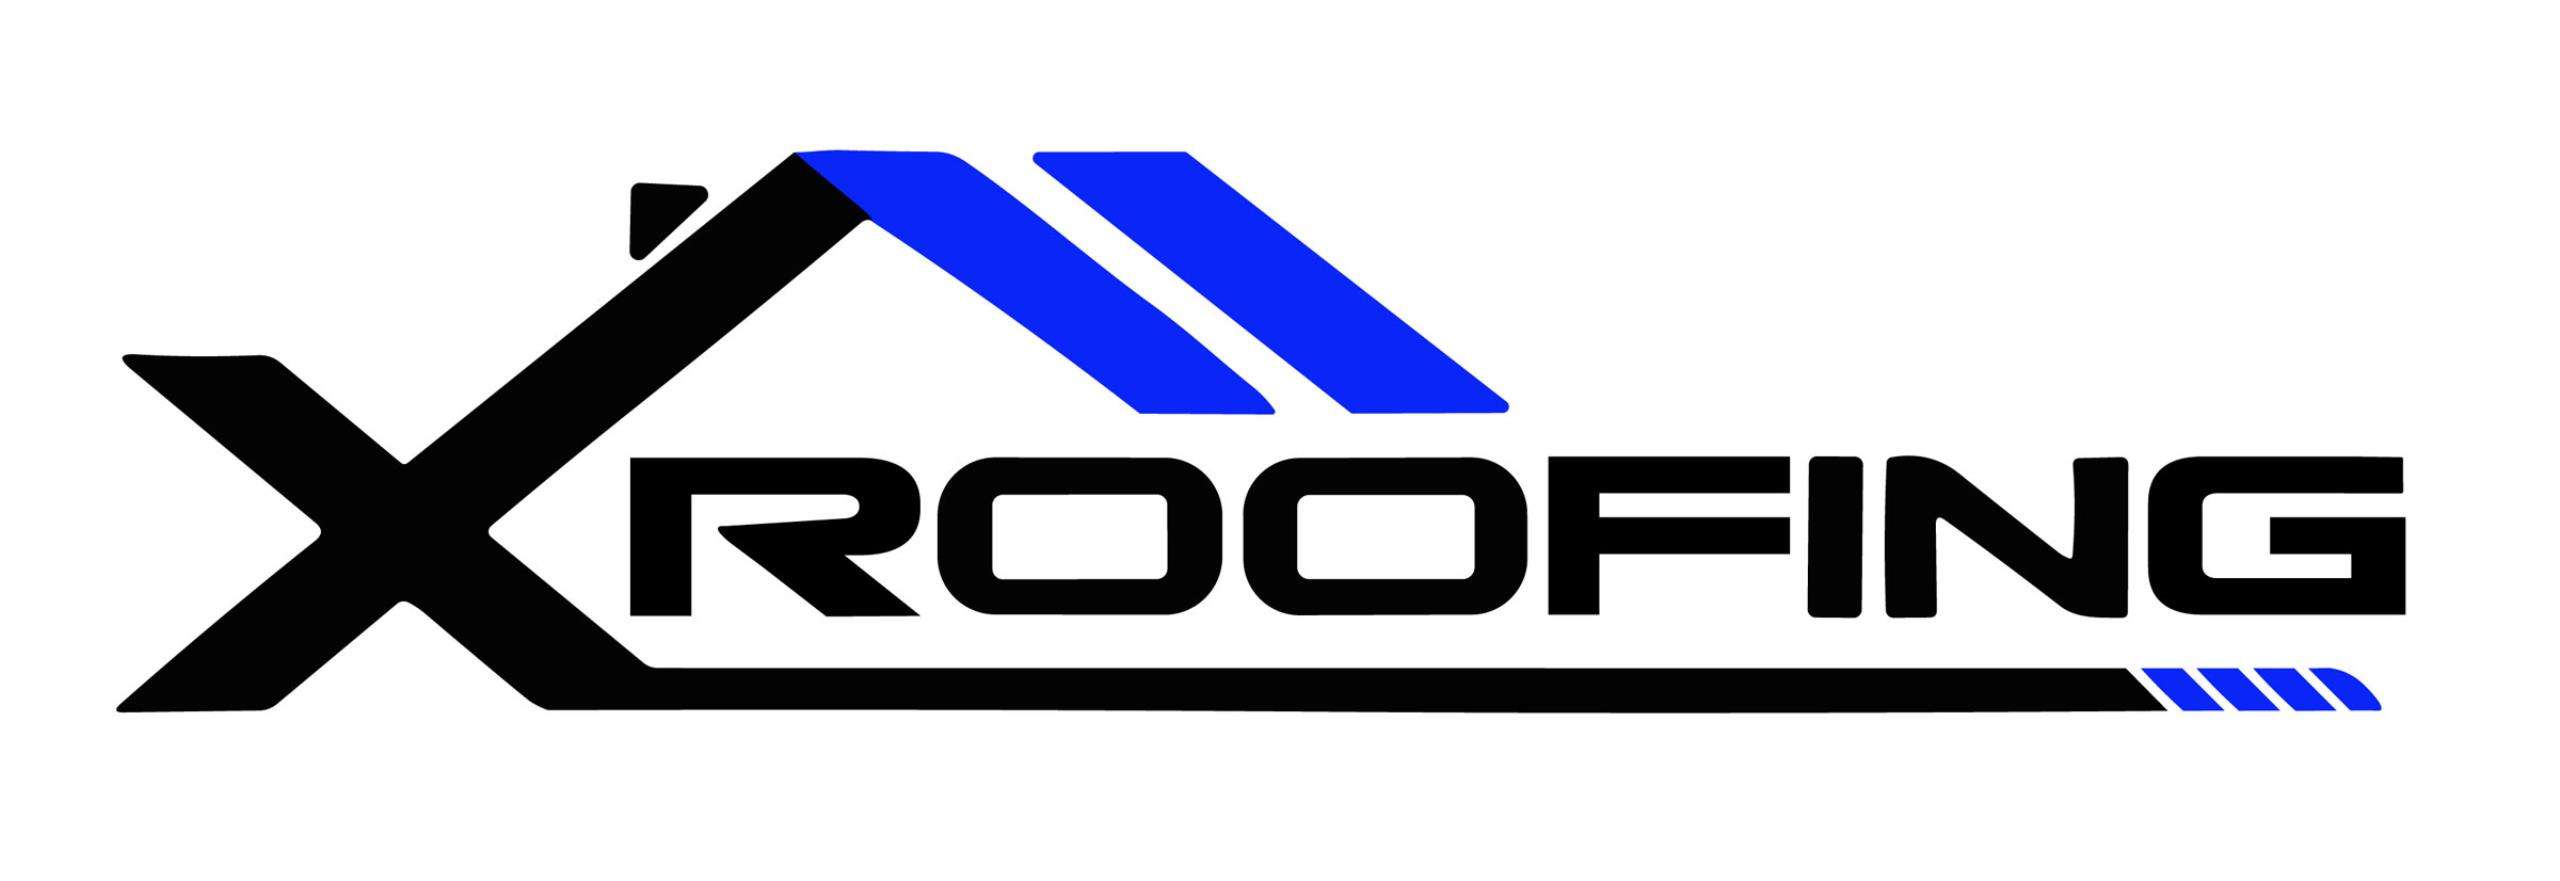 XRoofing, LLC Logo